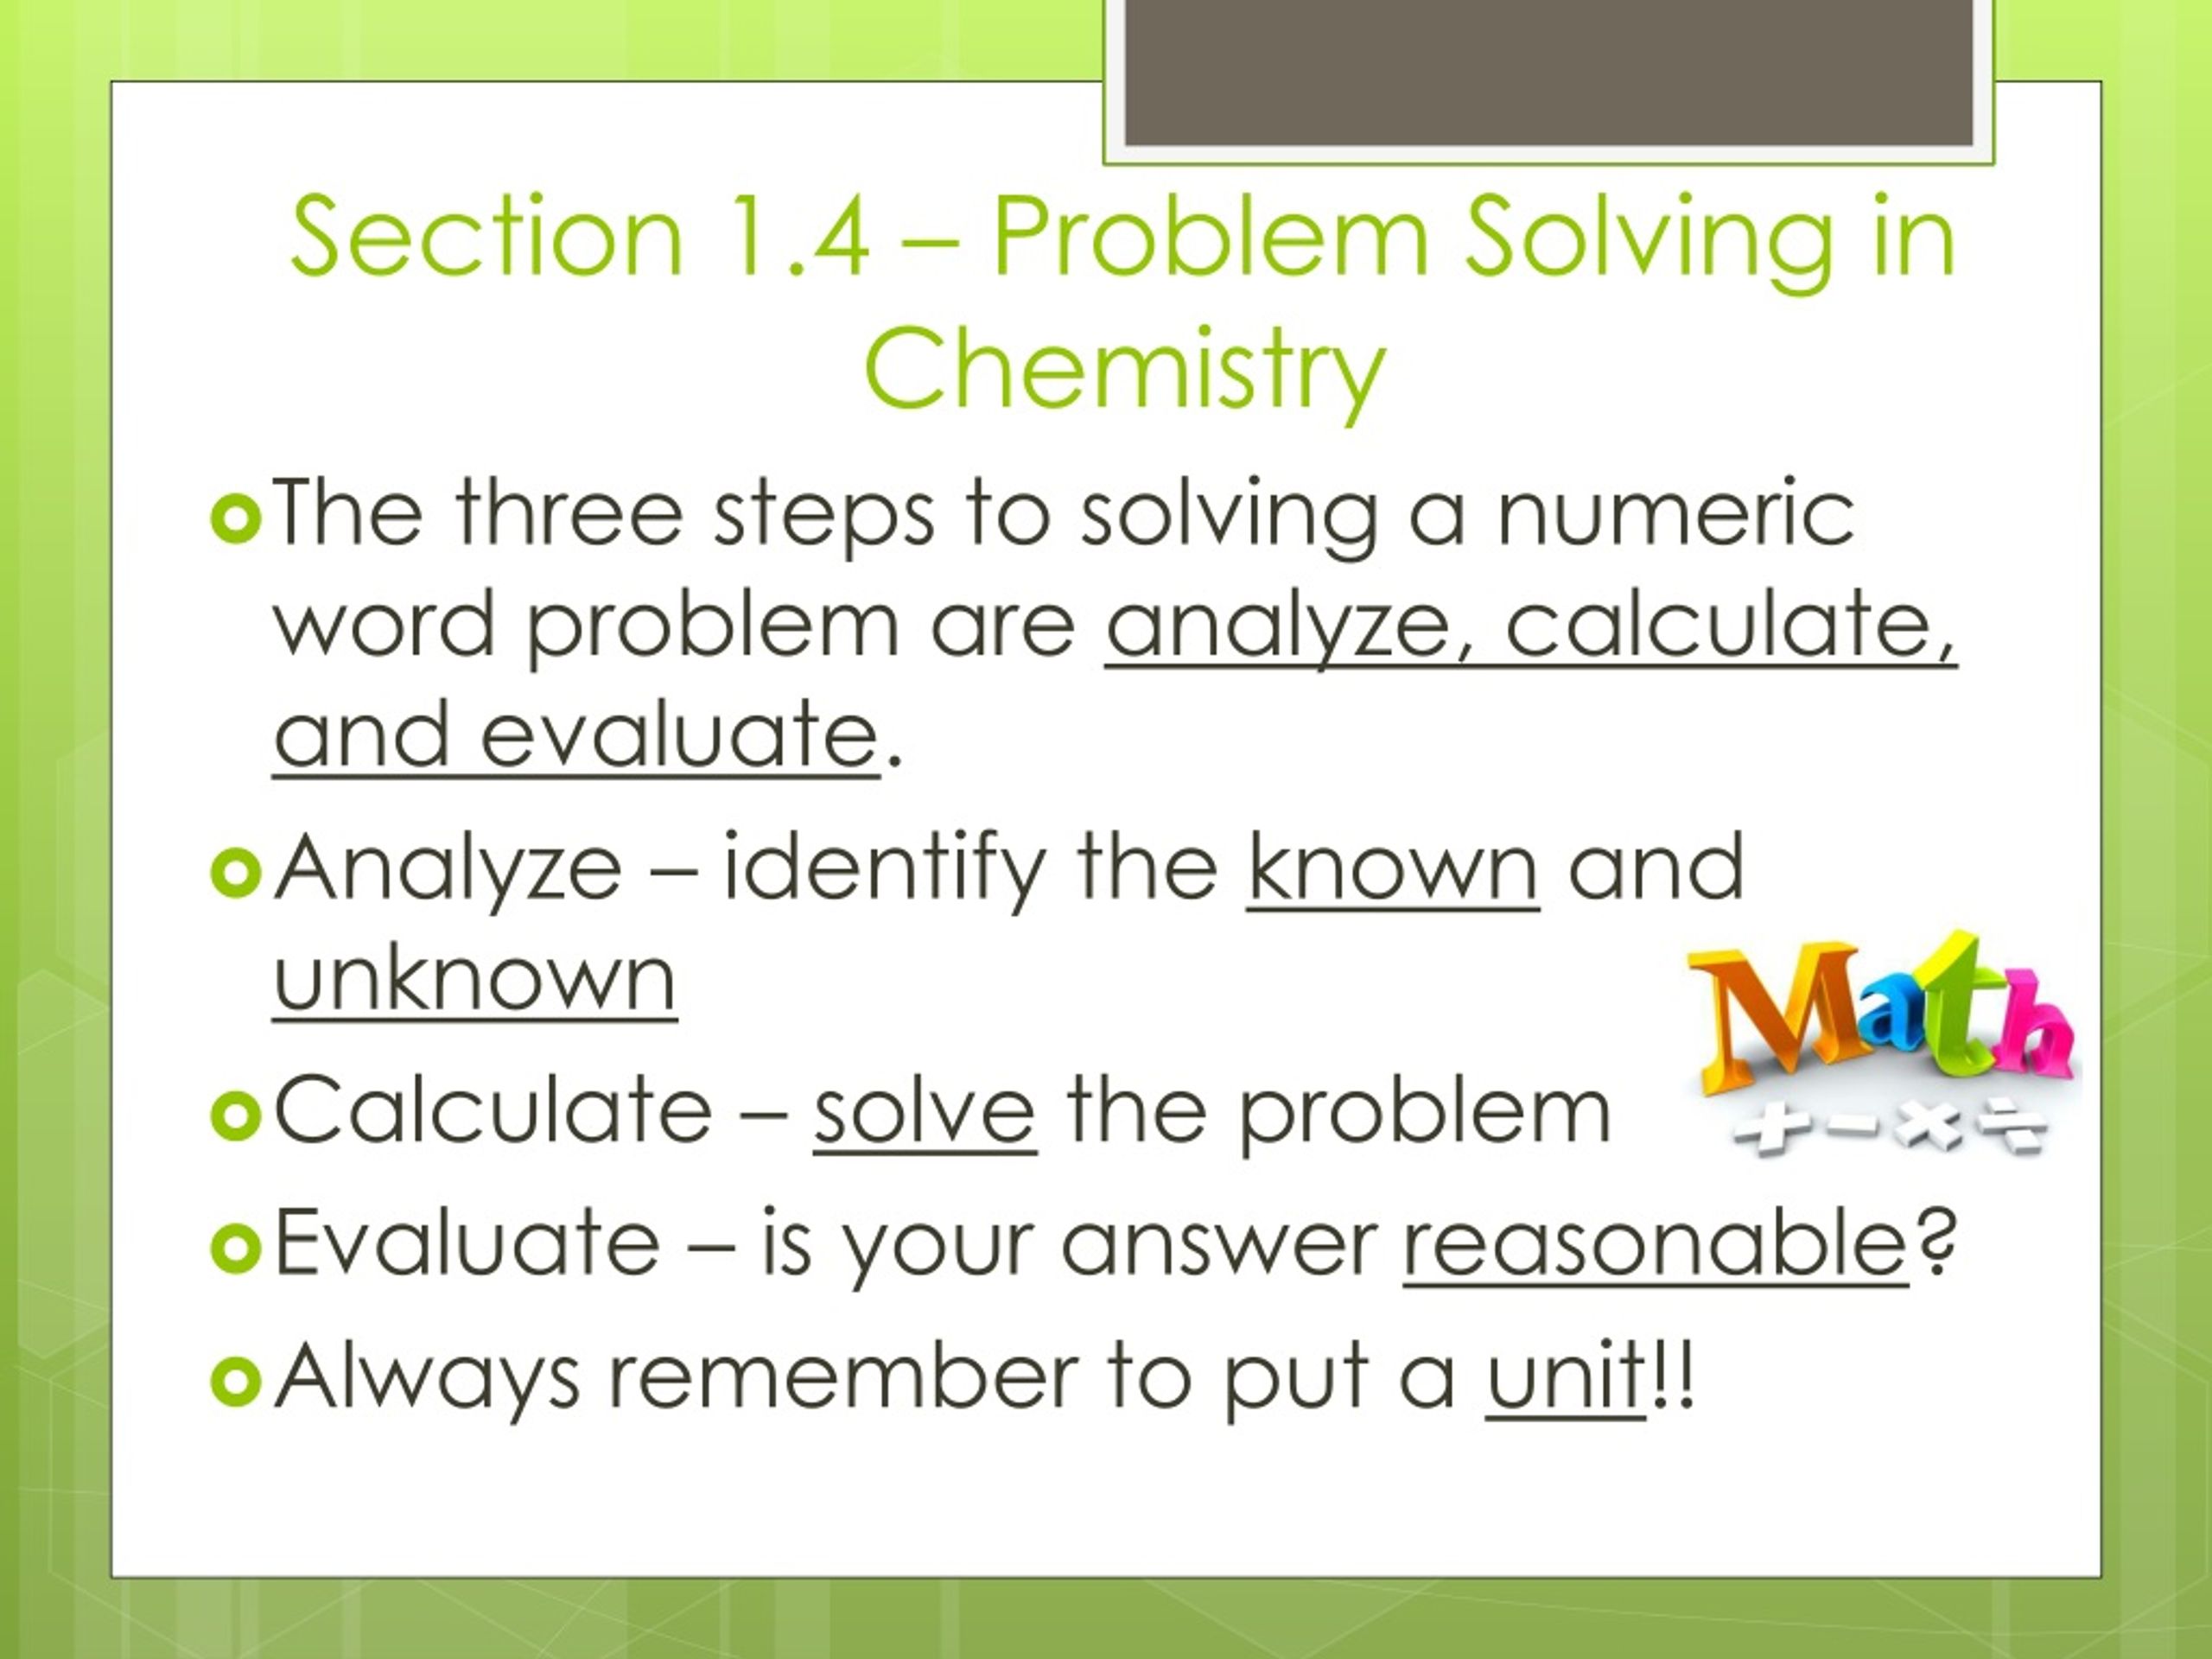 problem solving in chemistry 1.4